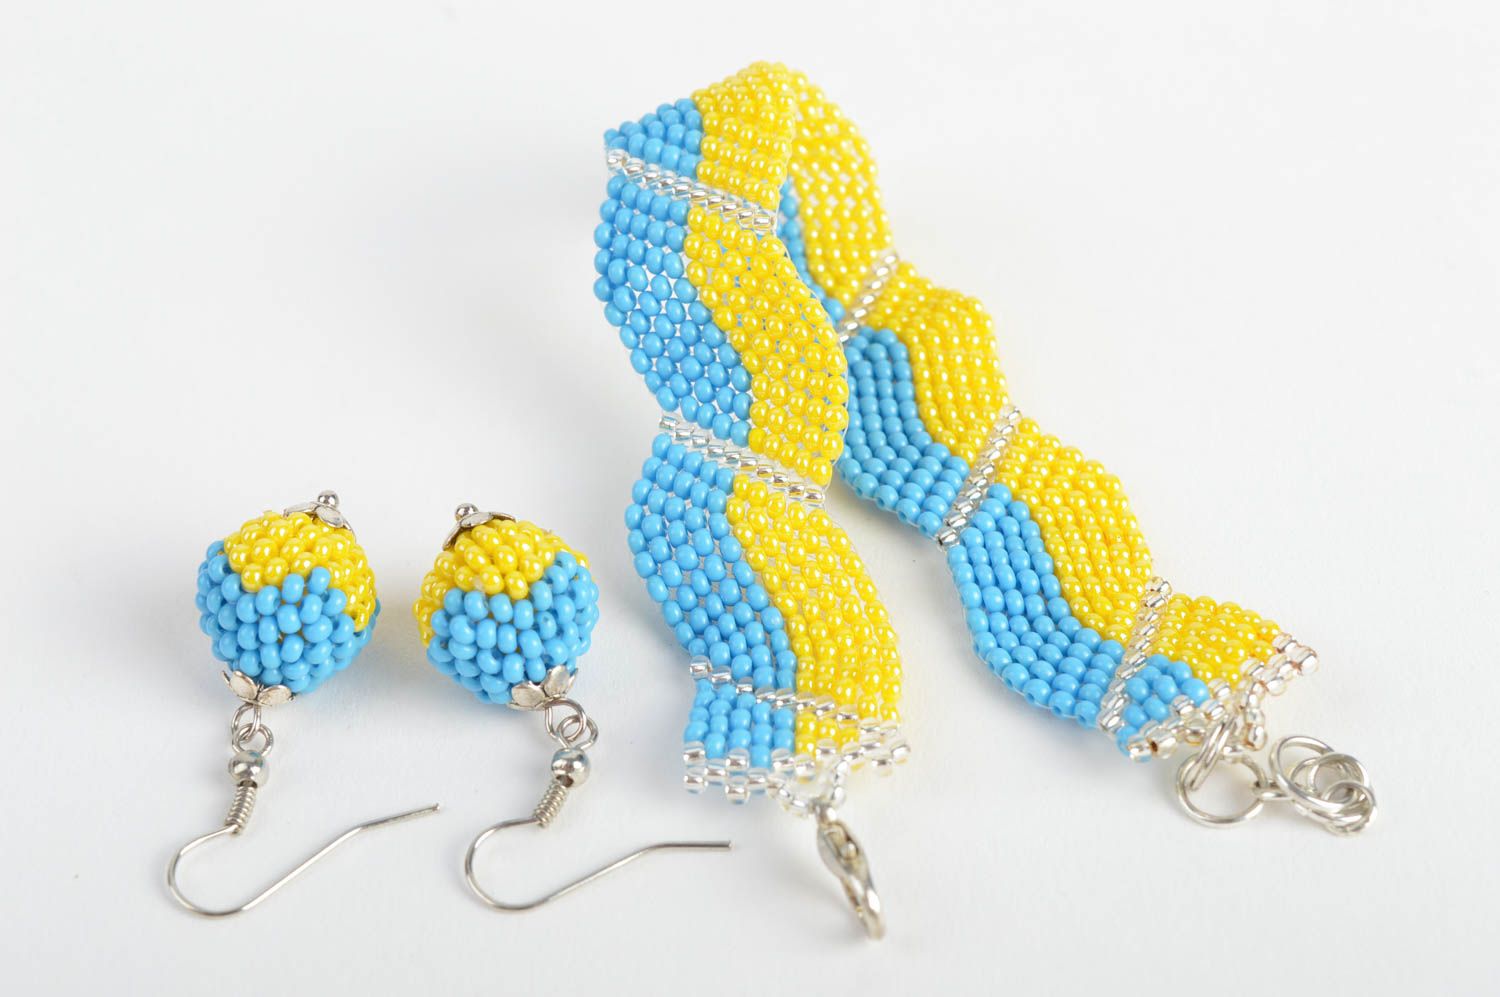 Handmade yellow and blue beaded jewelry set 2 items wrist bracelet and earrings photo 5